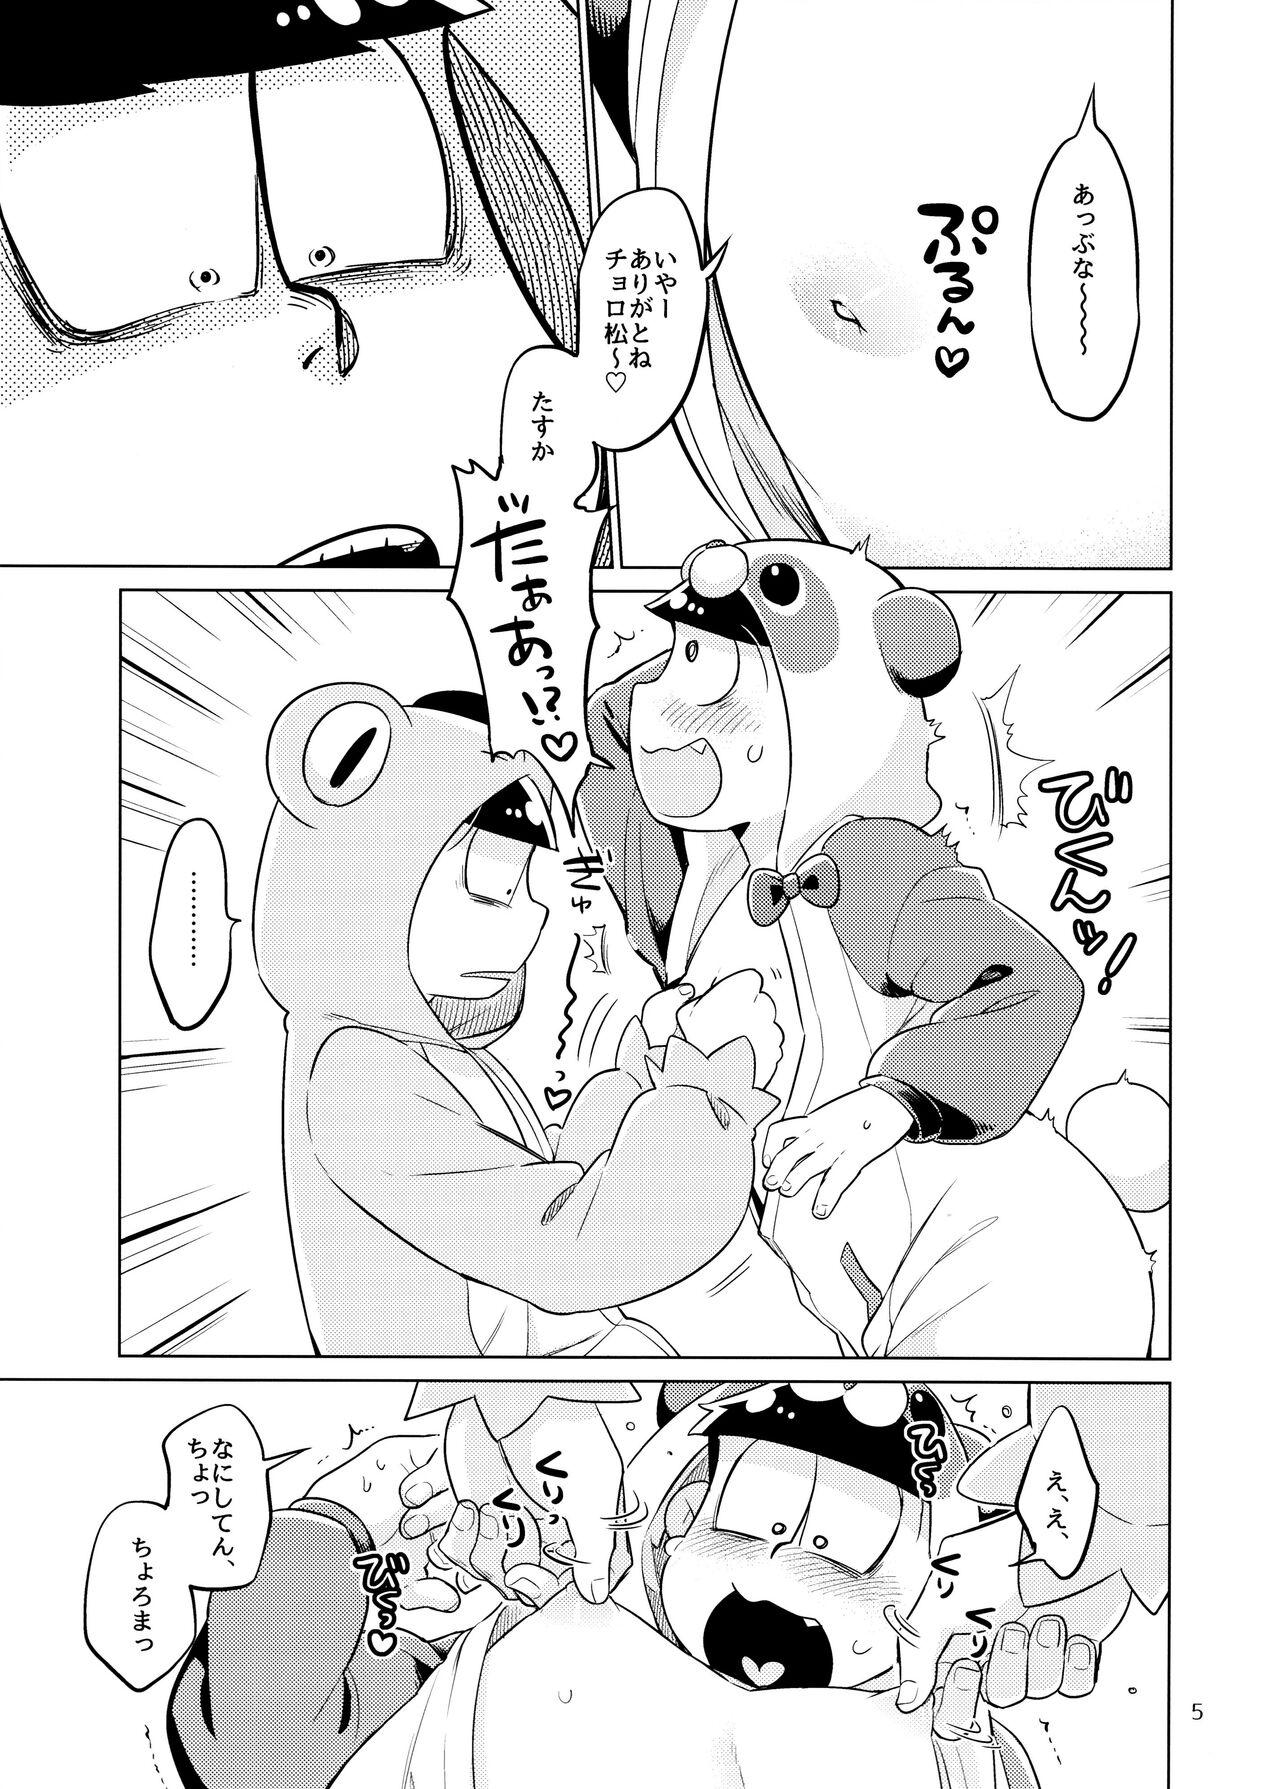 Latex Pajamama! - Osomatsu san Pica - Page 5